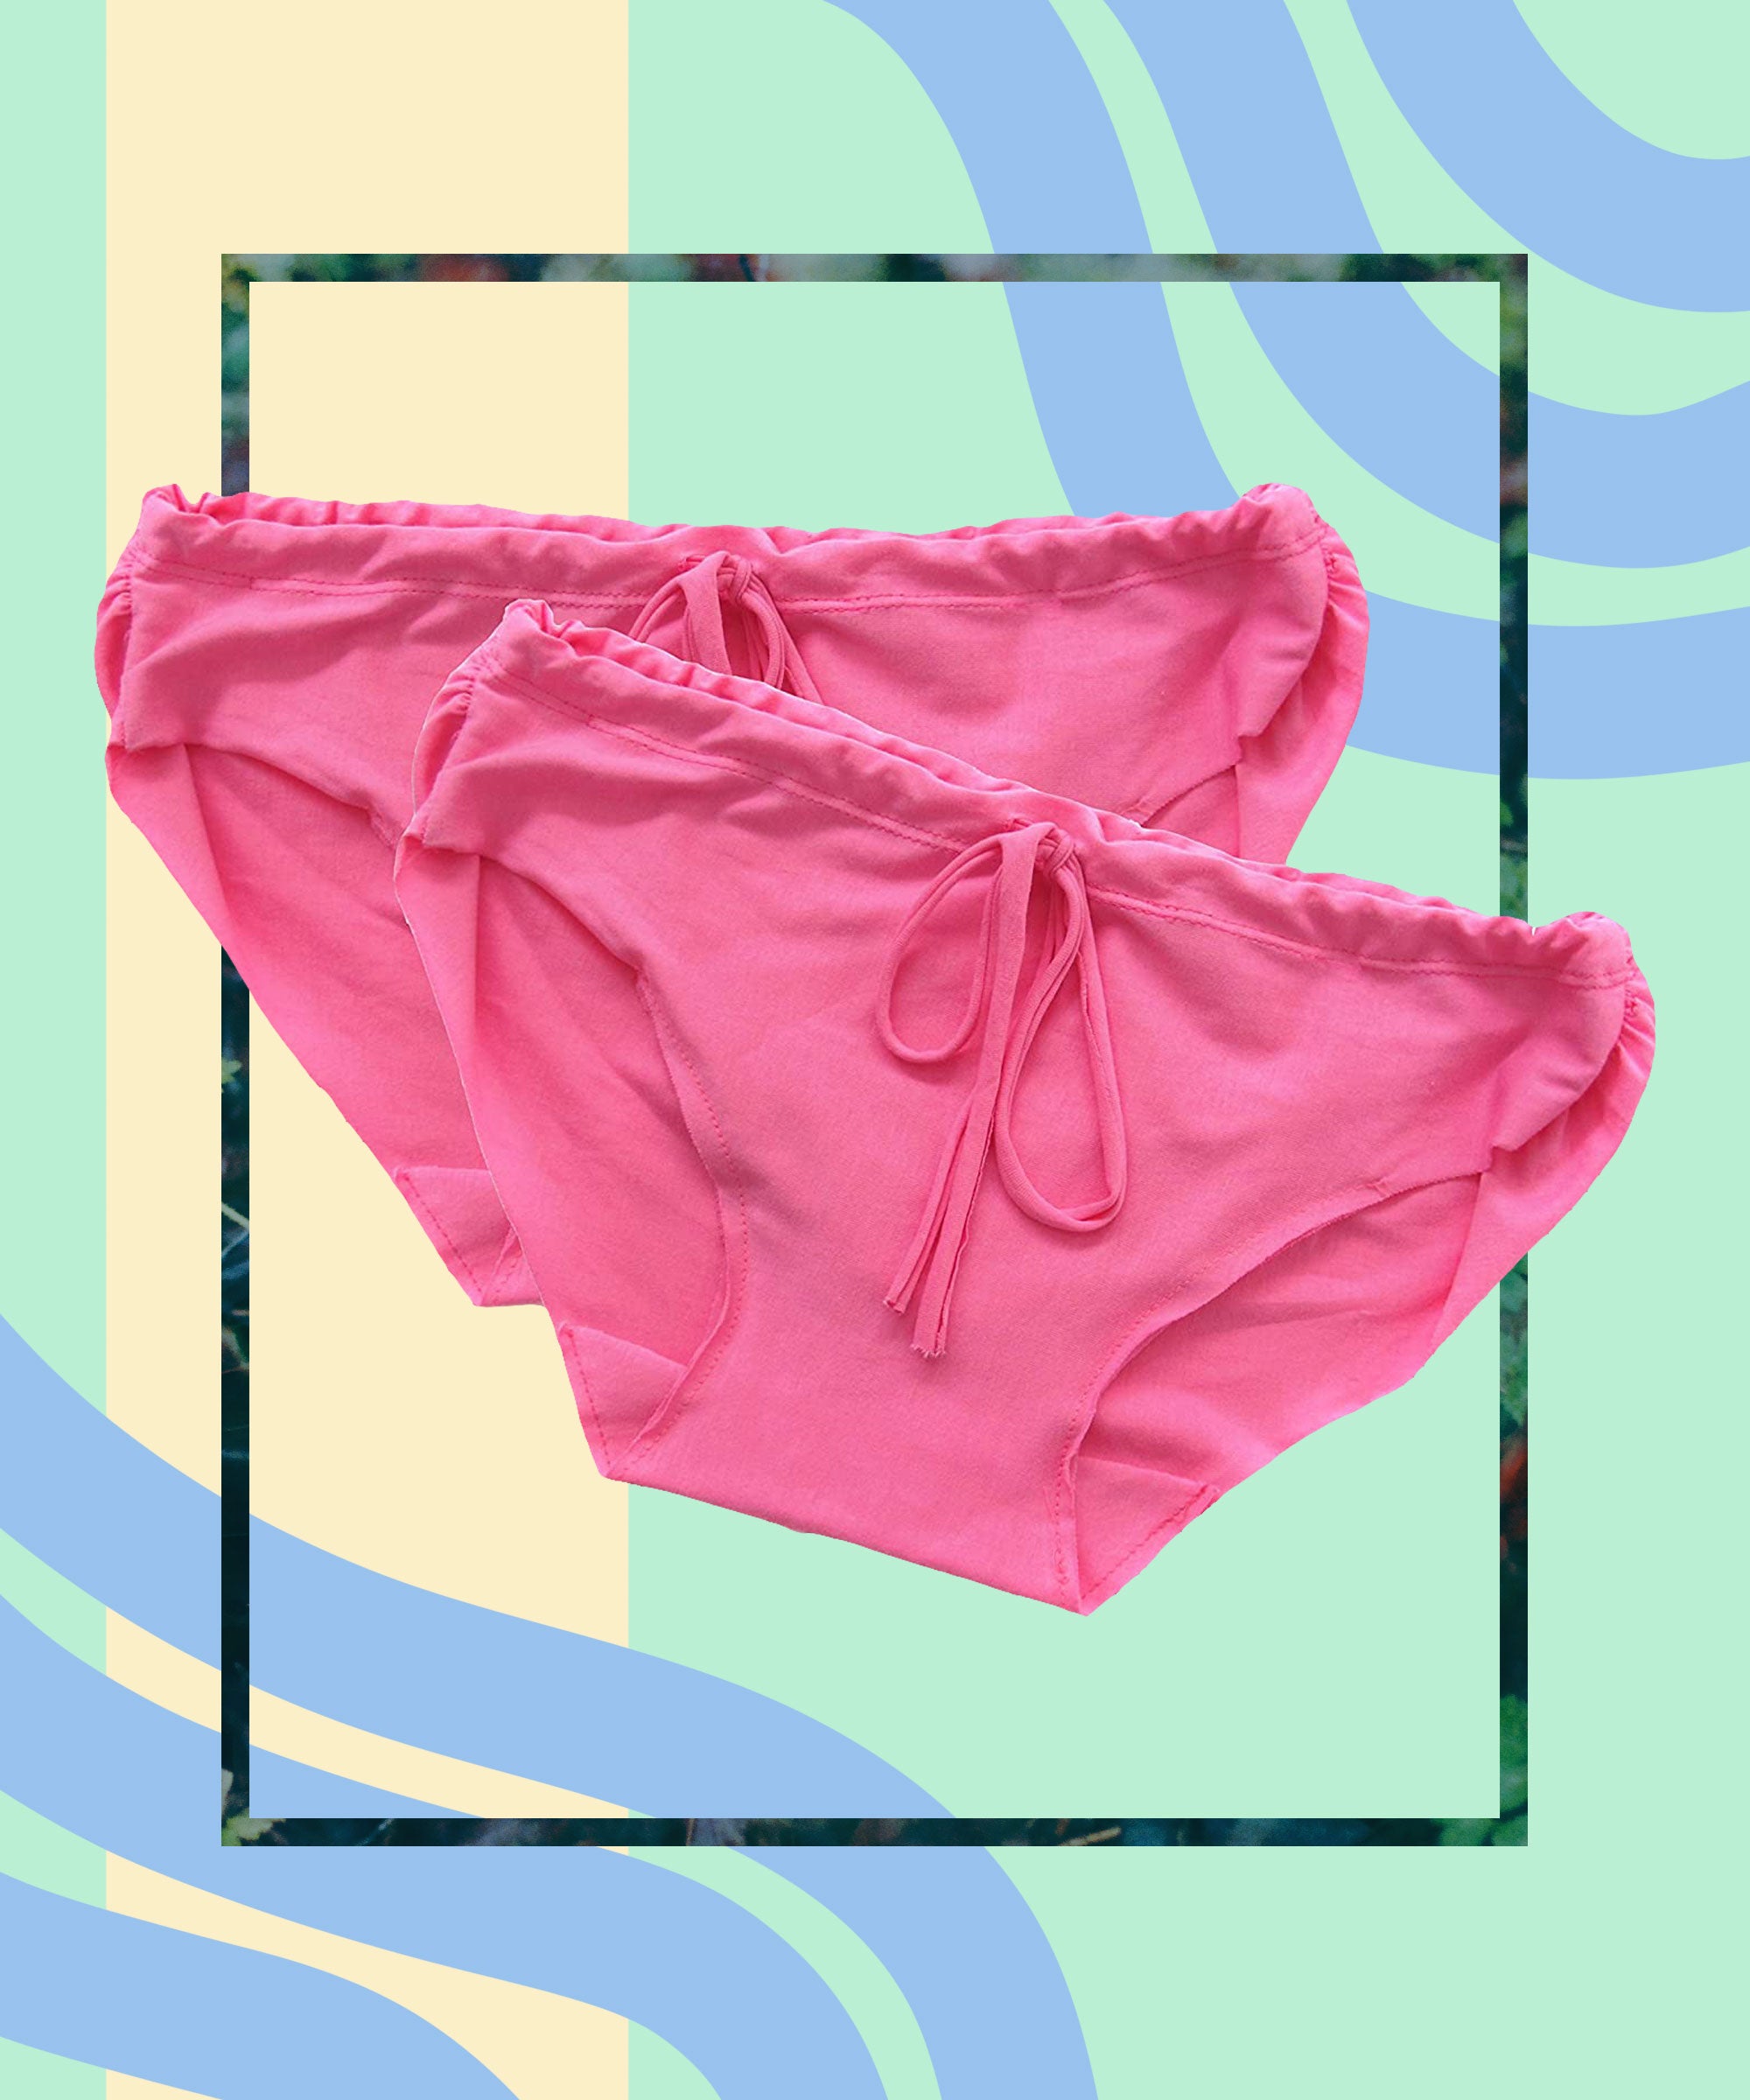 Comfortable Postpartum Underwear Collection for Moms